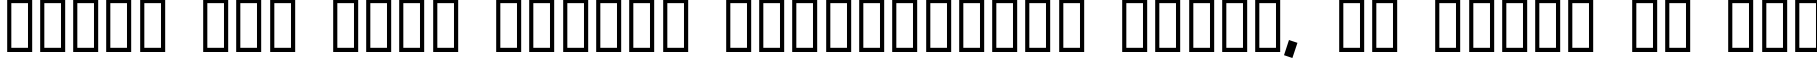 Пример написания шрифтом Klondike Bold текста на русском